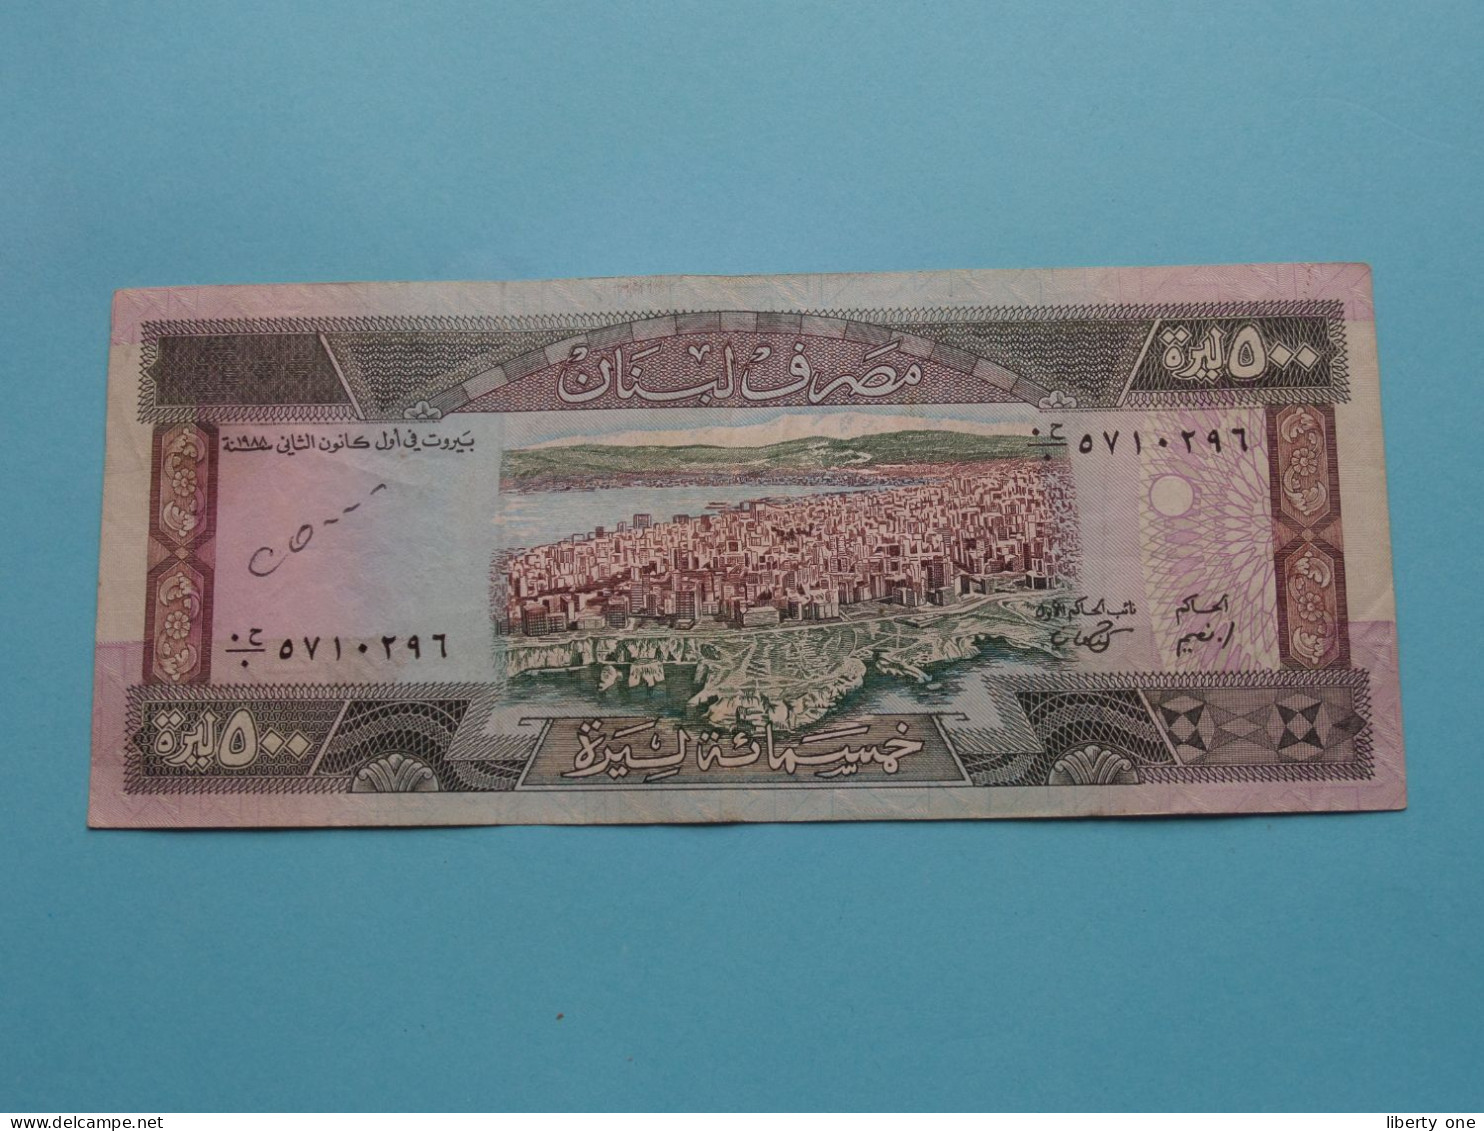 1988 - 500 Livres Mille ( Banque De Liban ) Lebanon 1988 ( For Grade, Please See SCANS ) Used ! - Liban